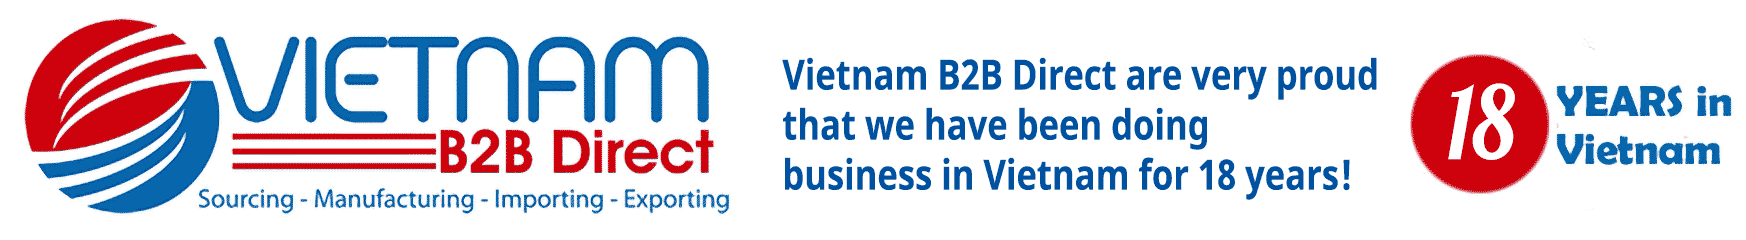 Vietnam B2B Direct